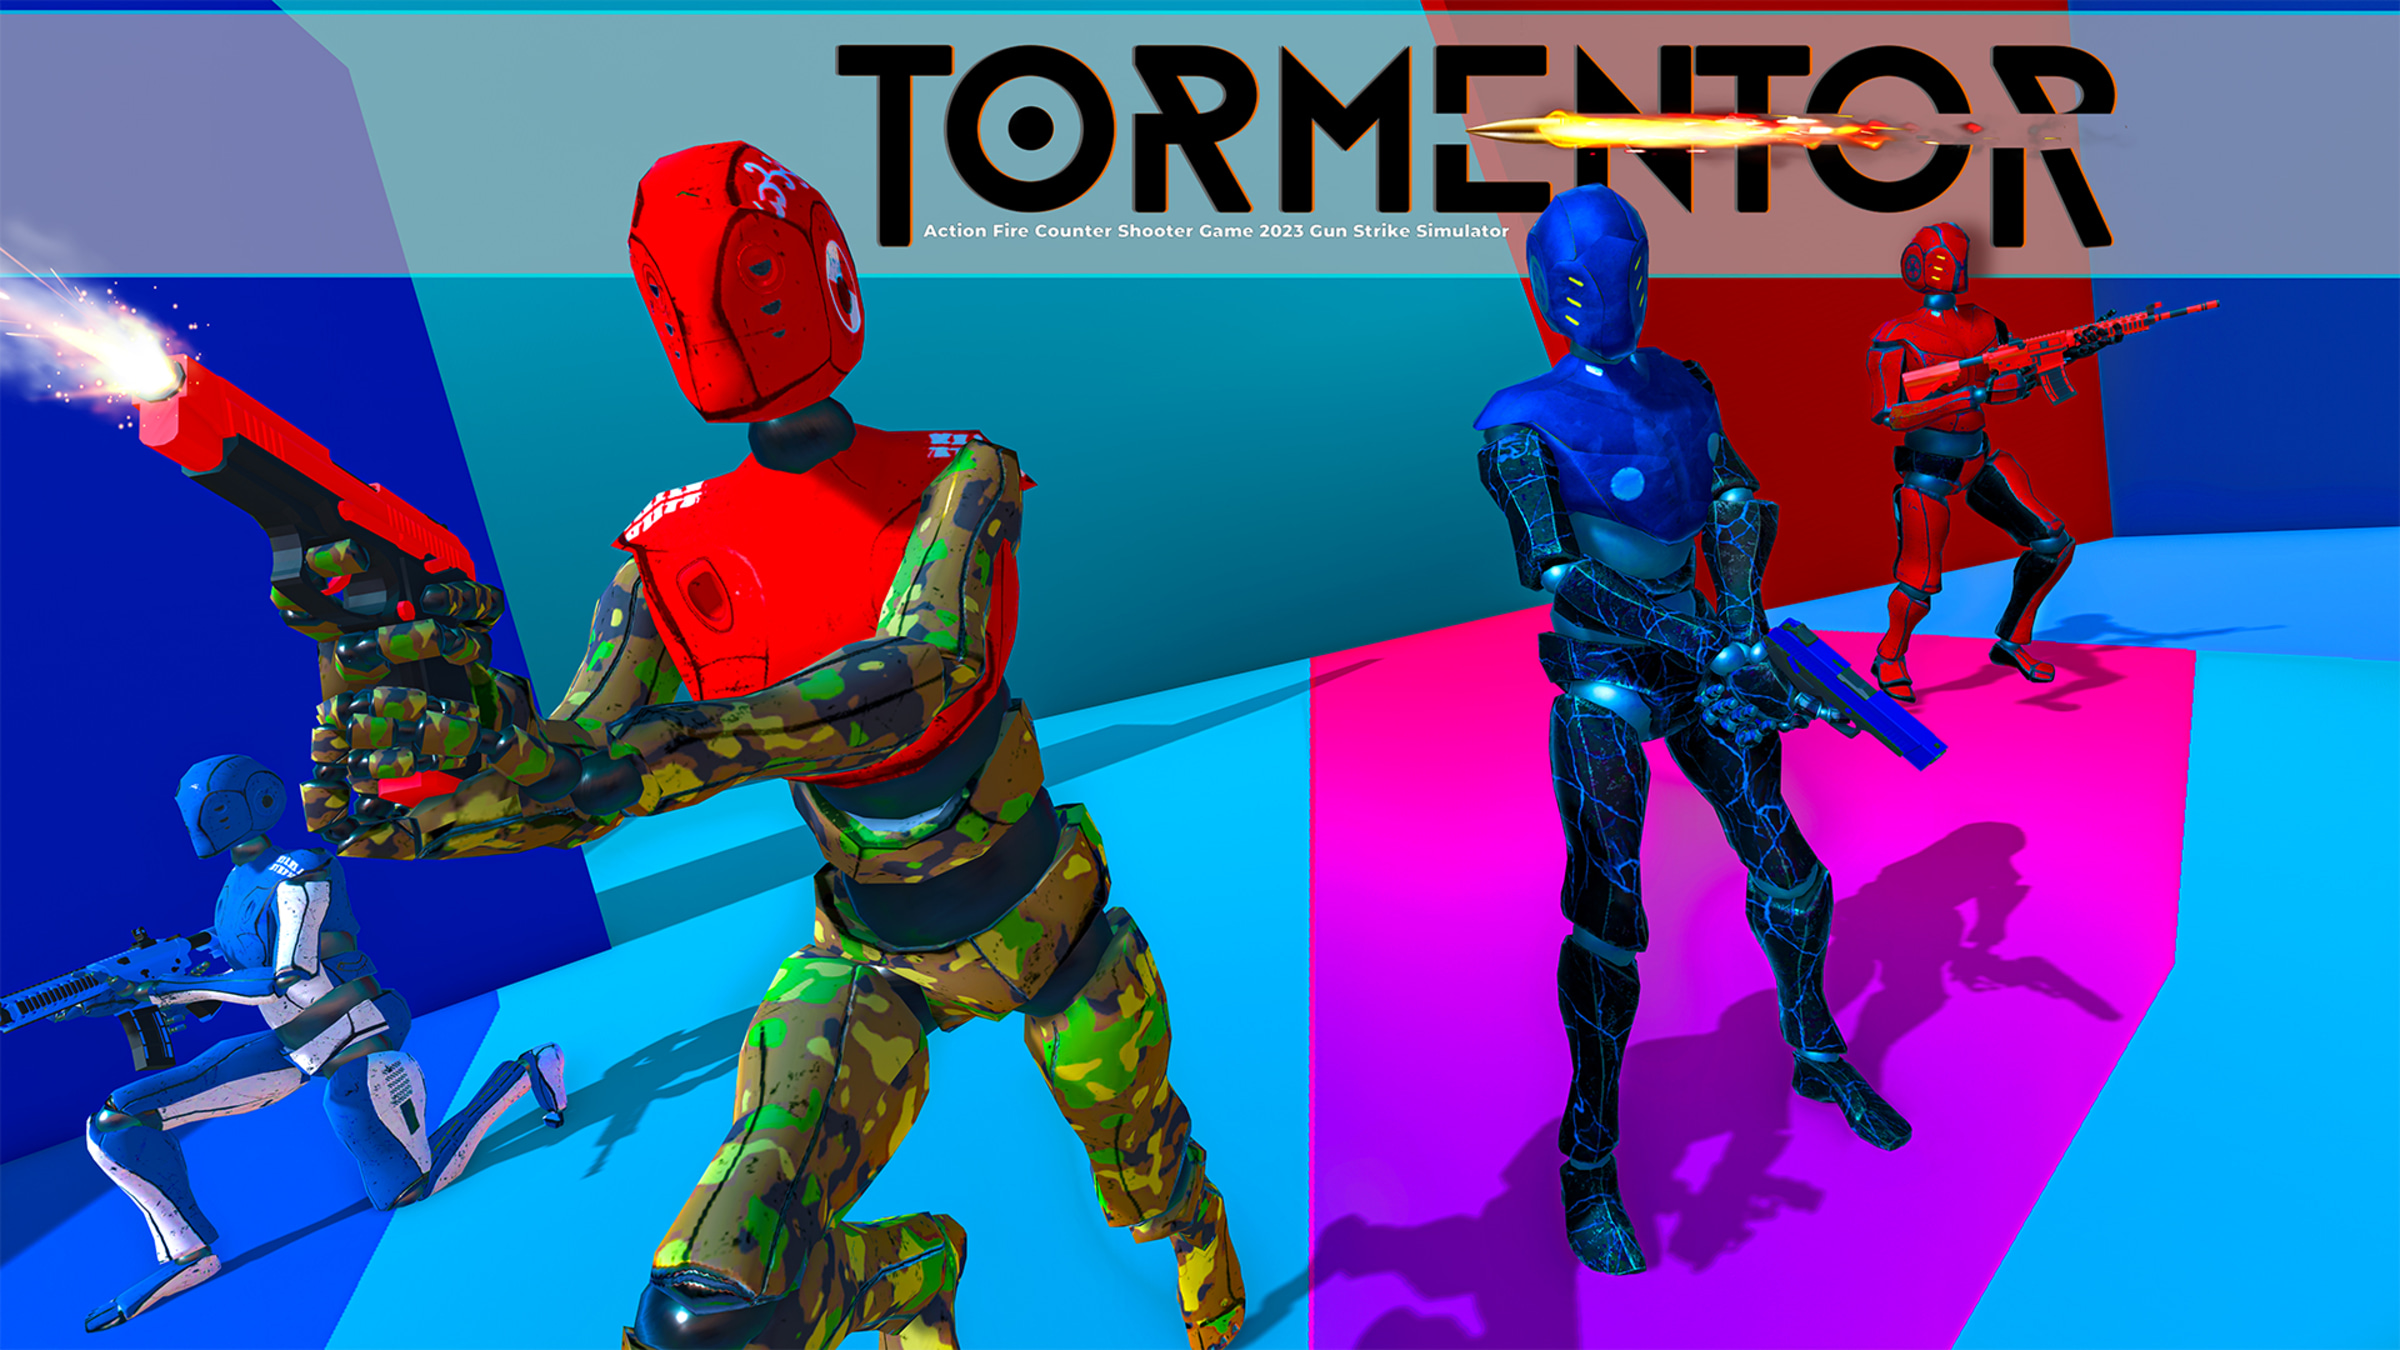 Tormentor-Action Fire Counter Shooter Game 2023 Gun Strike Simulator for Nintendo Switch